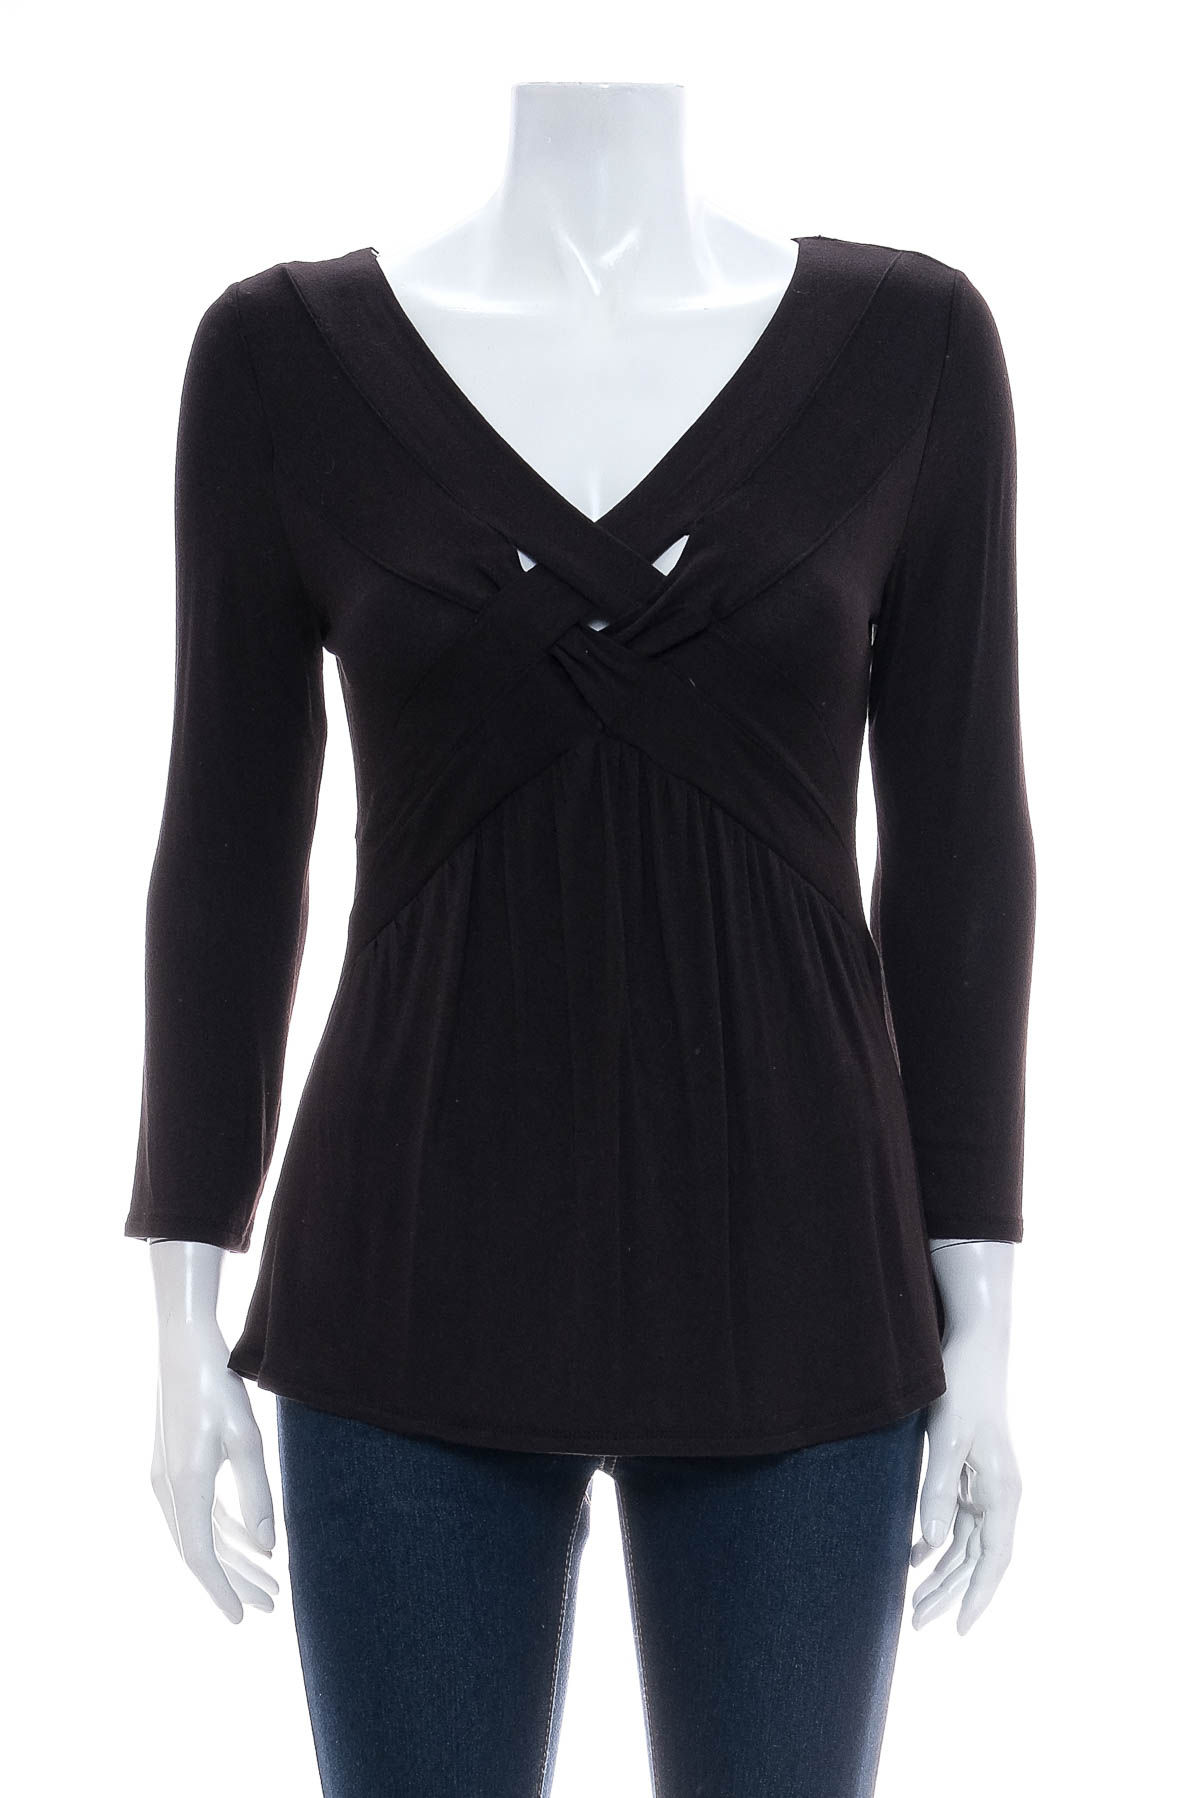 Women's blouse - New York & Company - 0